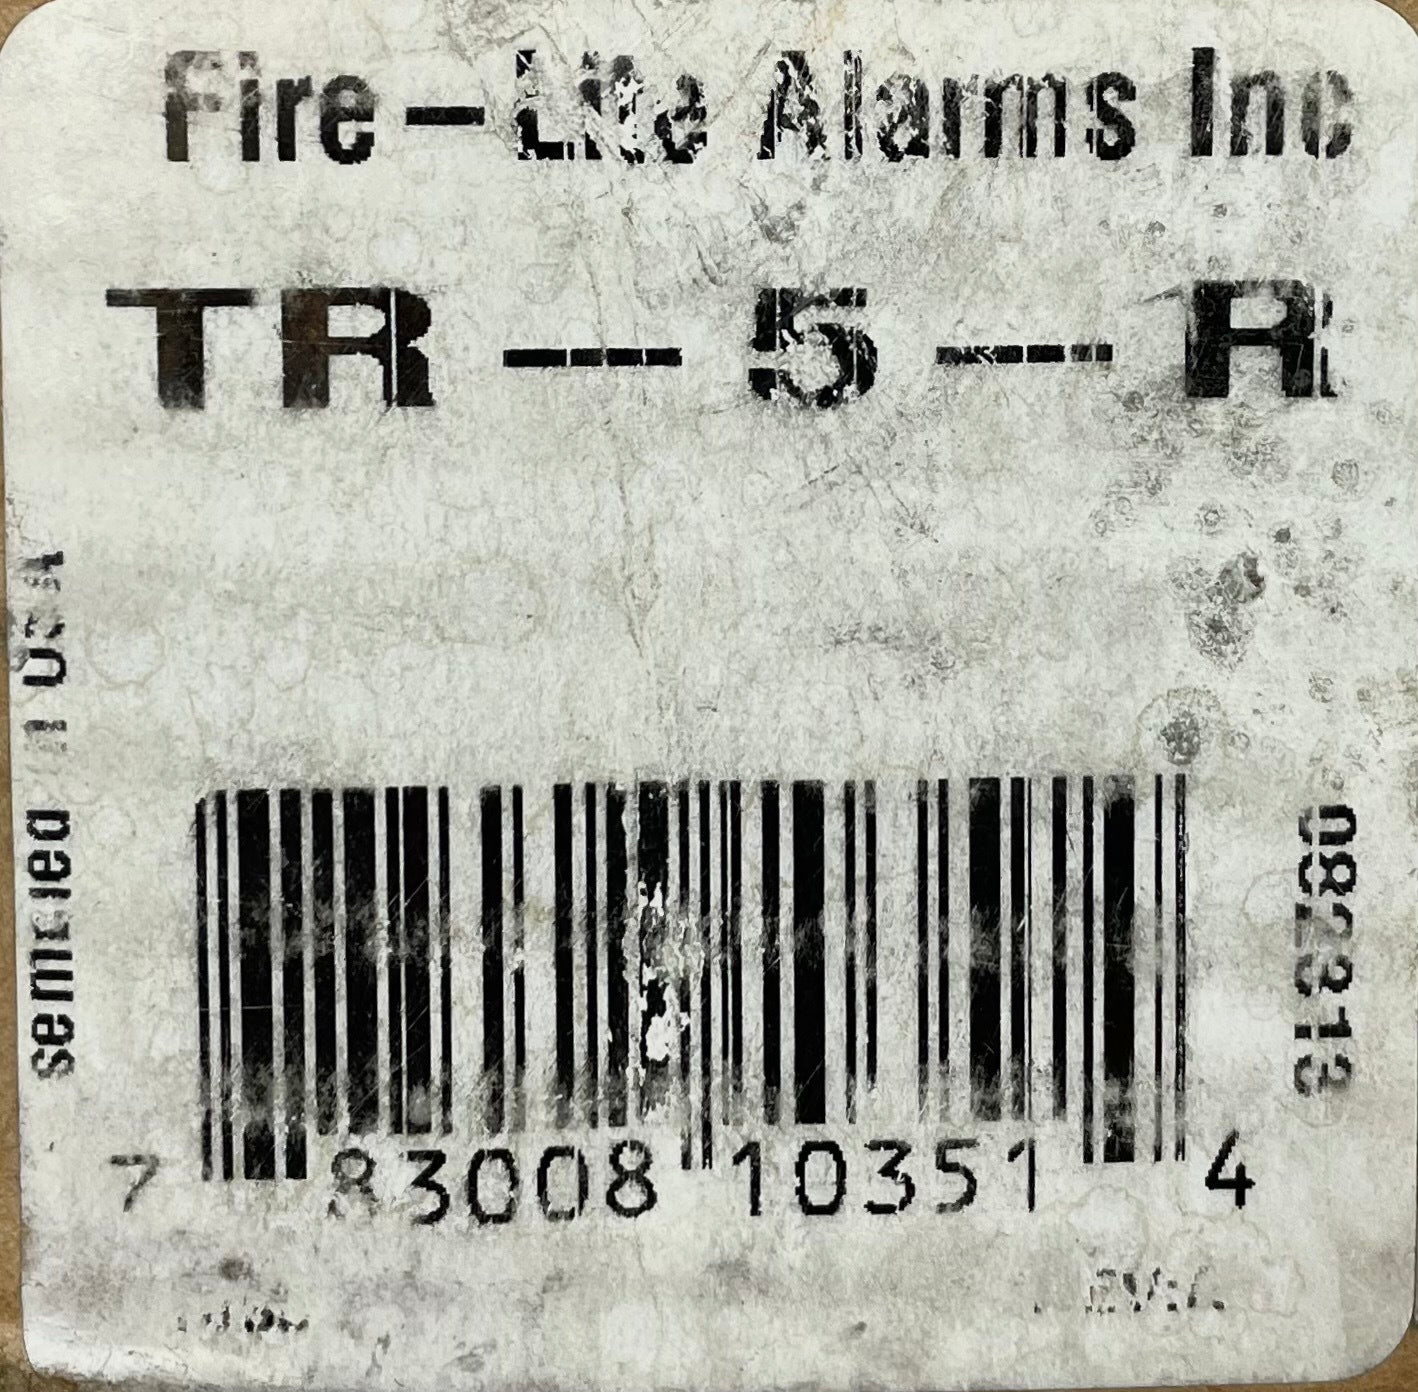 Honeywell TR-5-R - The Fire Alarm Supplier